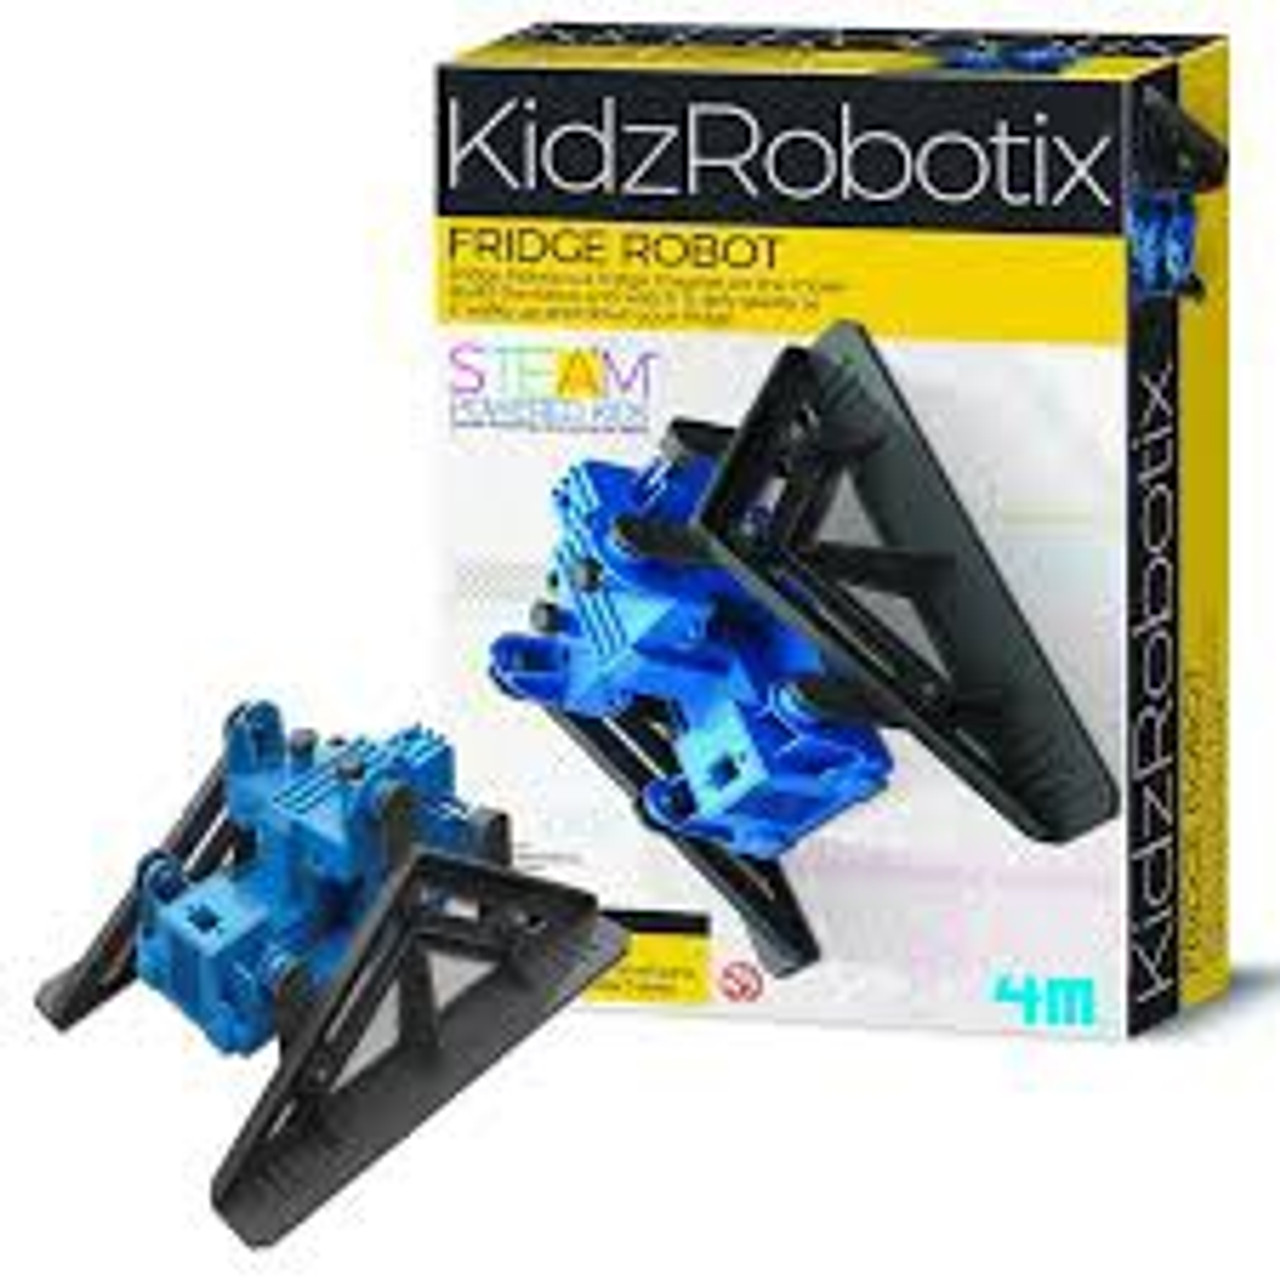 KIDZ ROBOTIX FRIDGE ROBOT